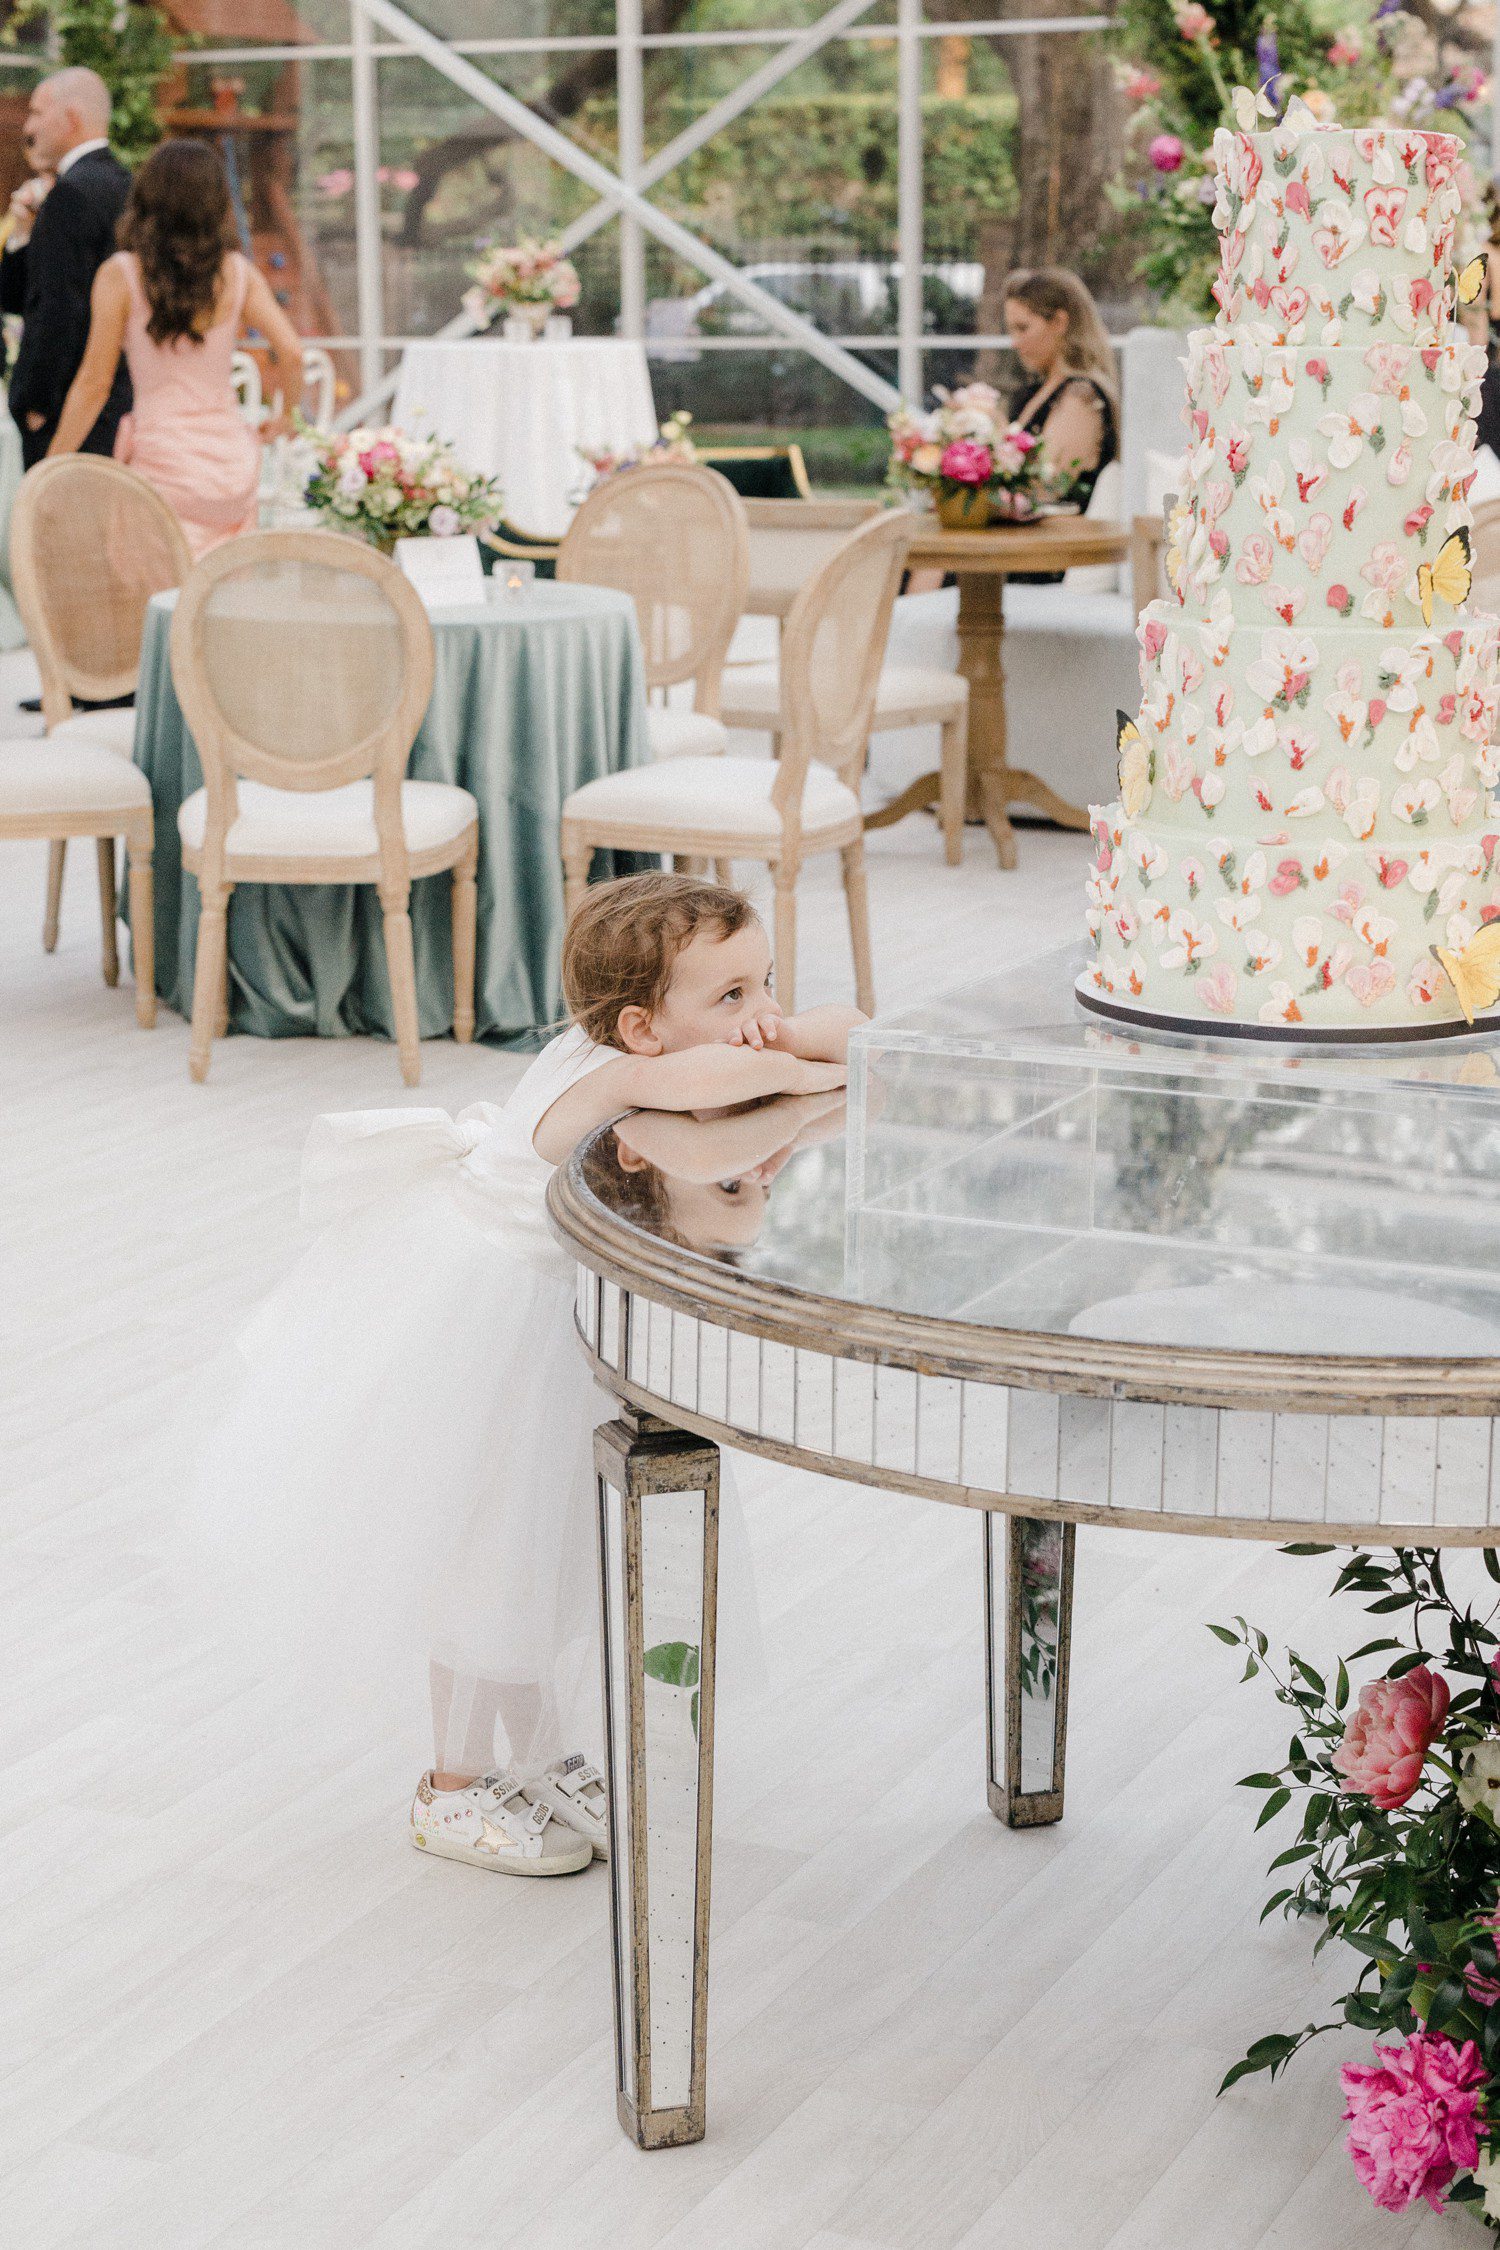 Flower Girl looking at wedding cake